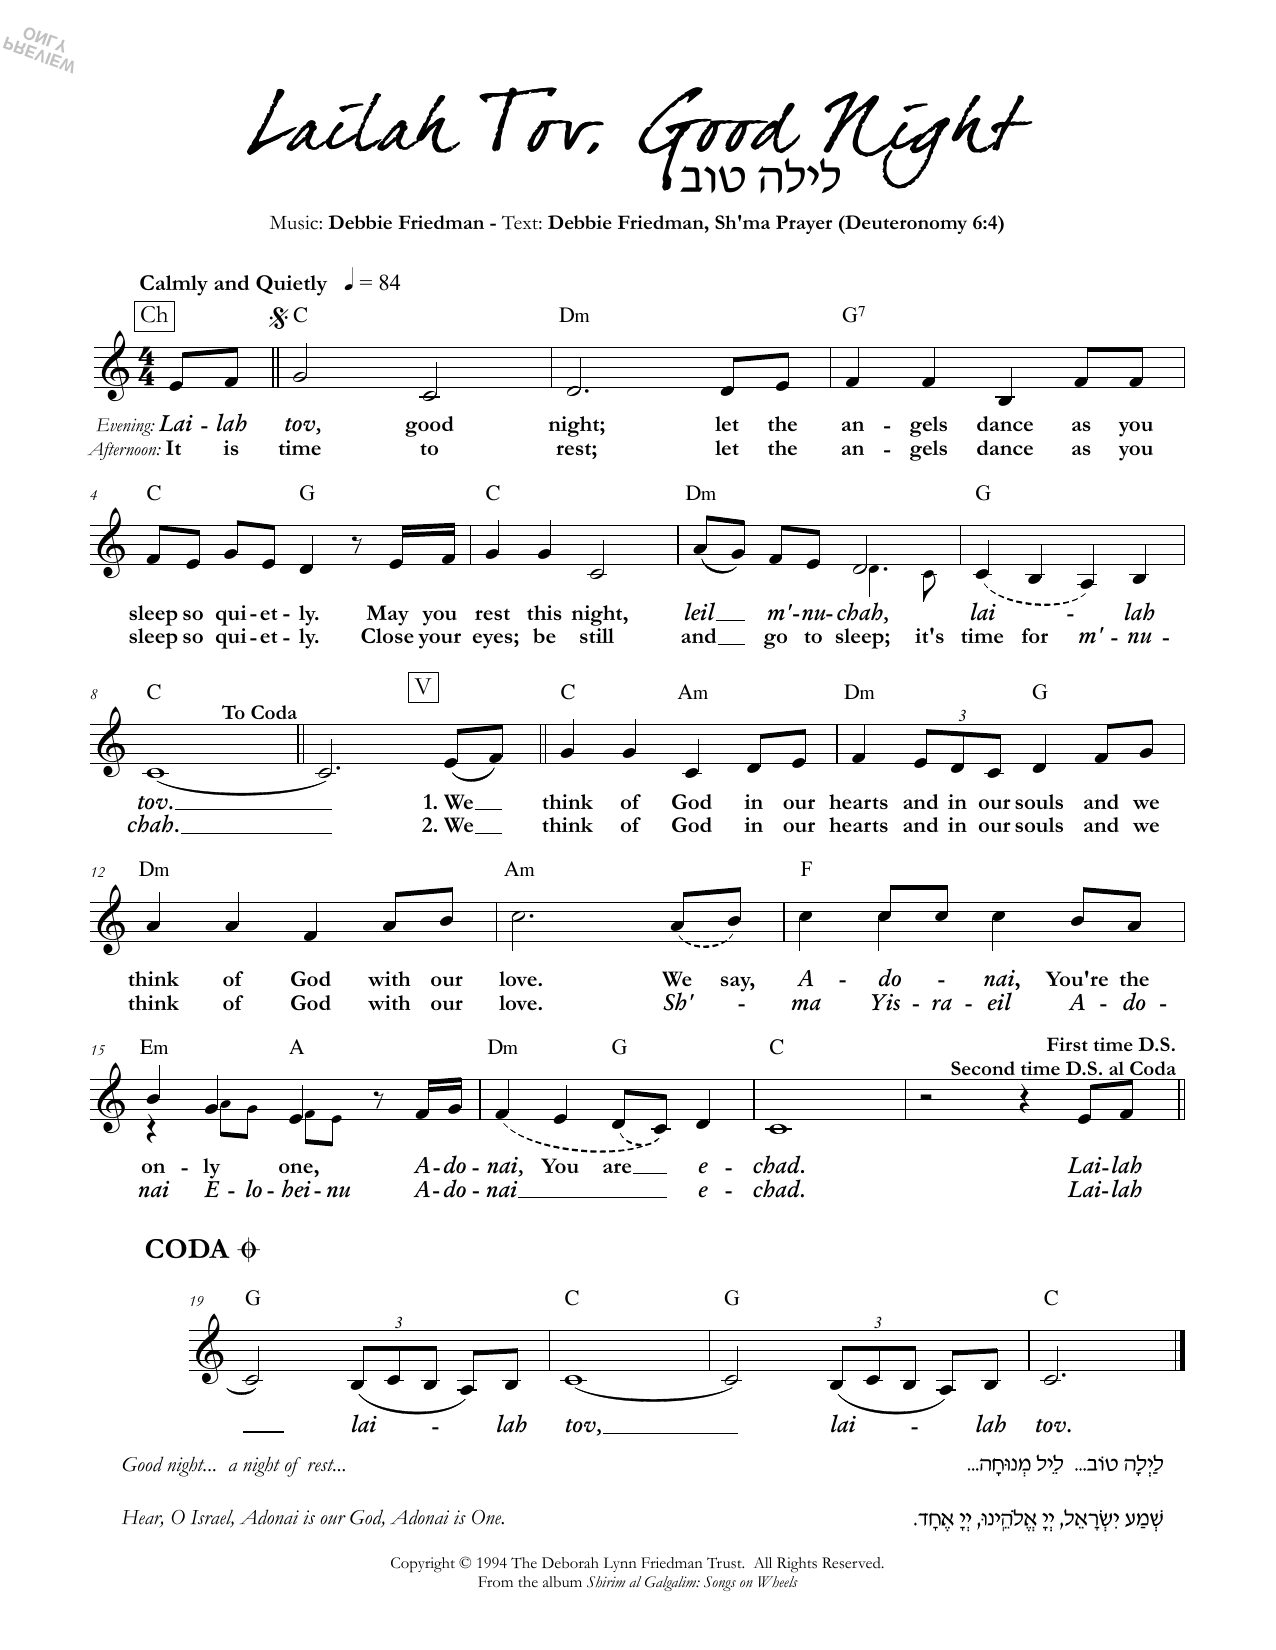 Debbie Friedman Lailah Tov, Good Night Sheet Music Notes & Chords for Lead Sheet / Fake Book - Download or Print PDF